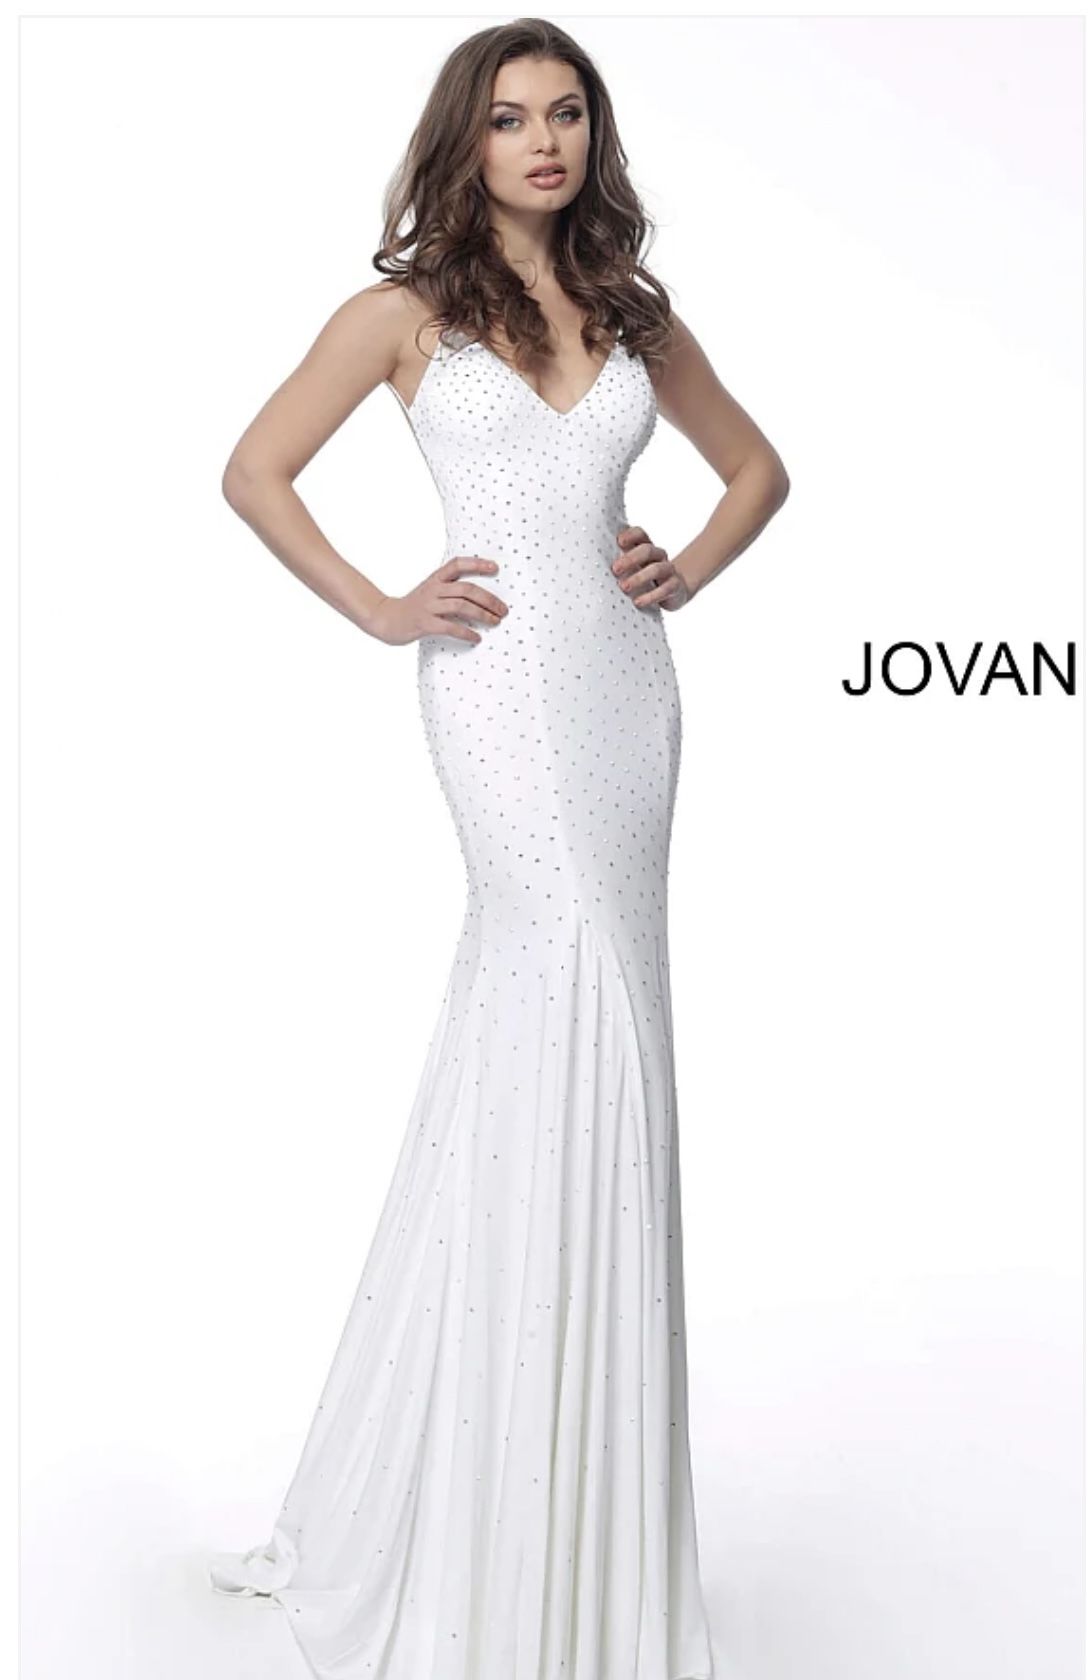 Jovani White Gown 